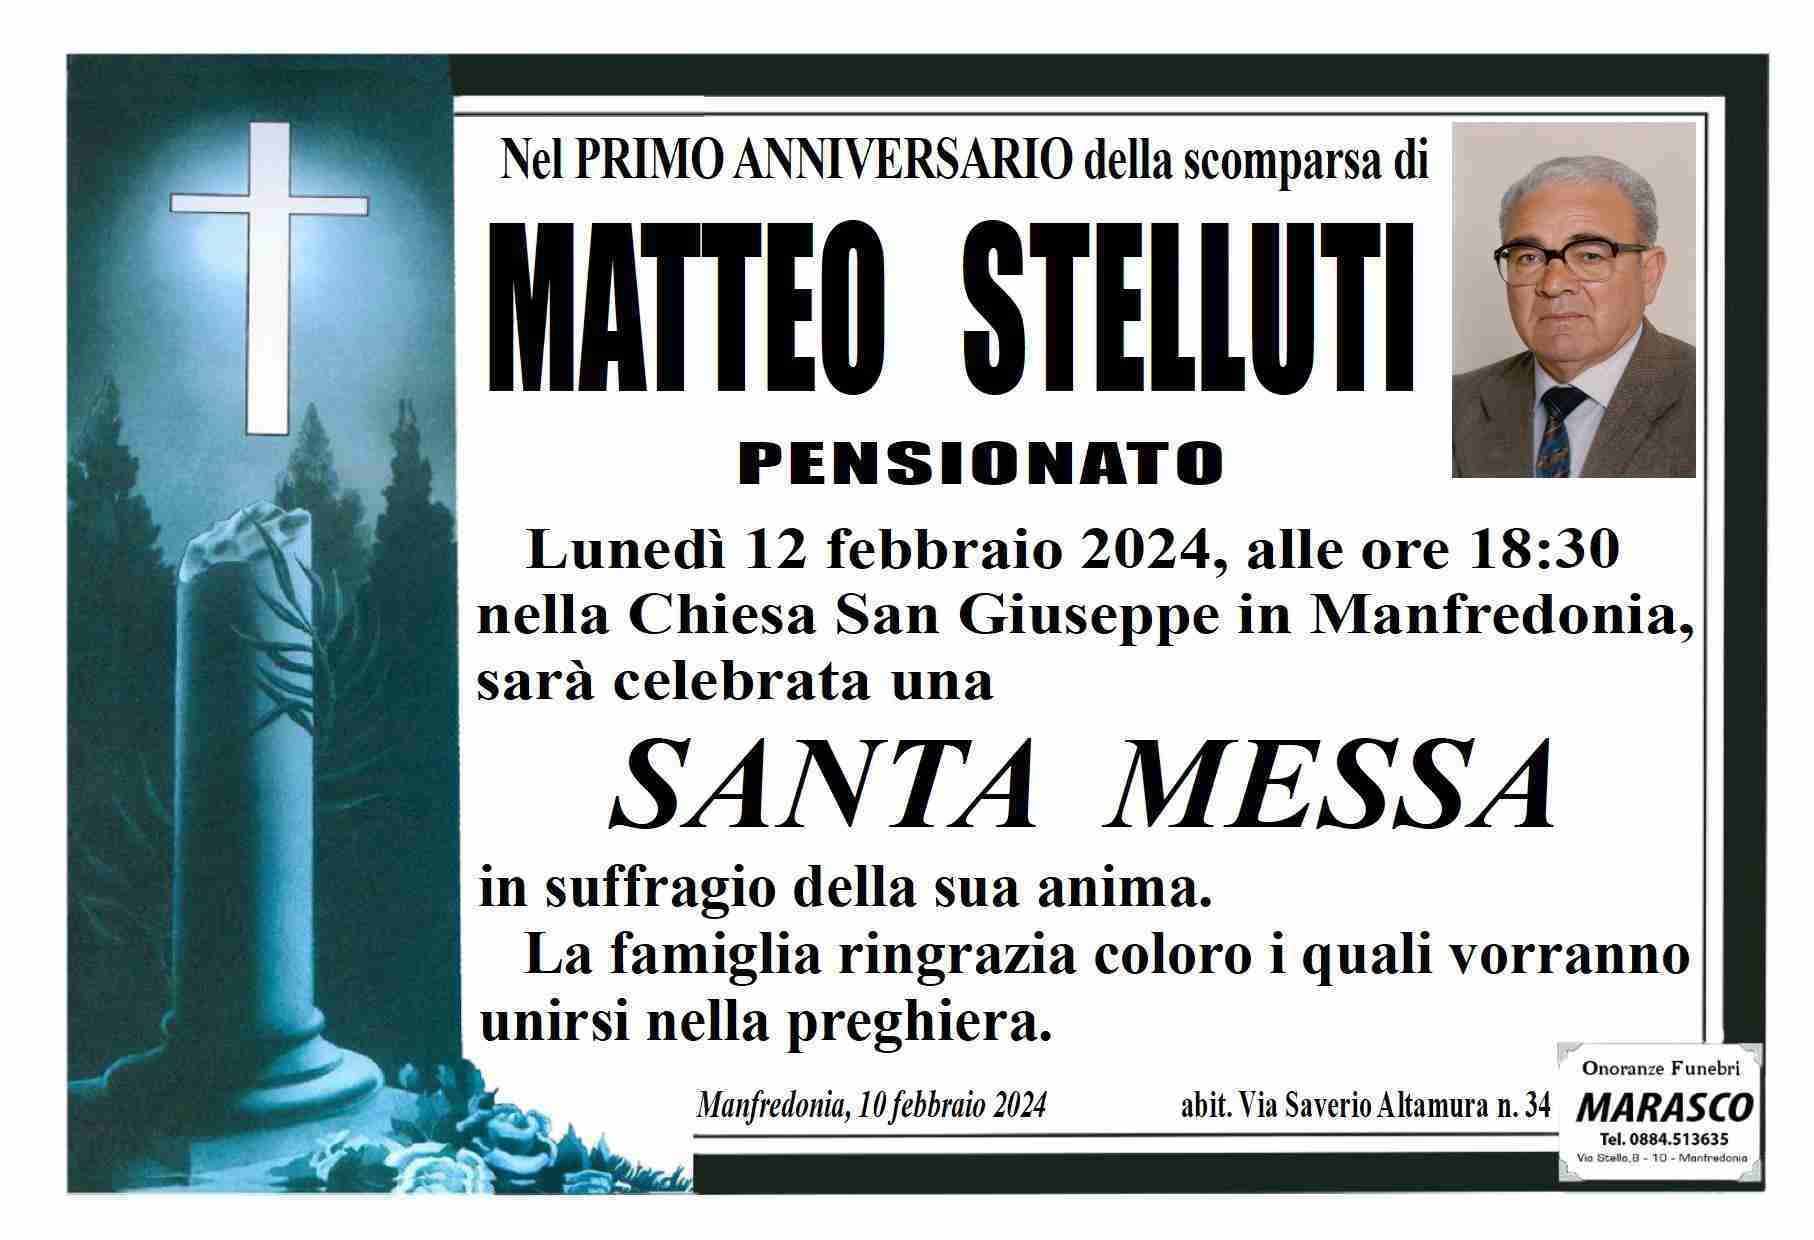 Matteo Stelluti